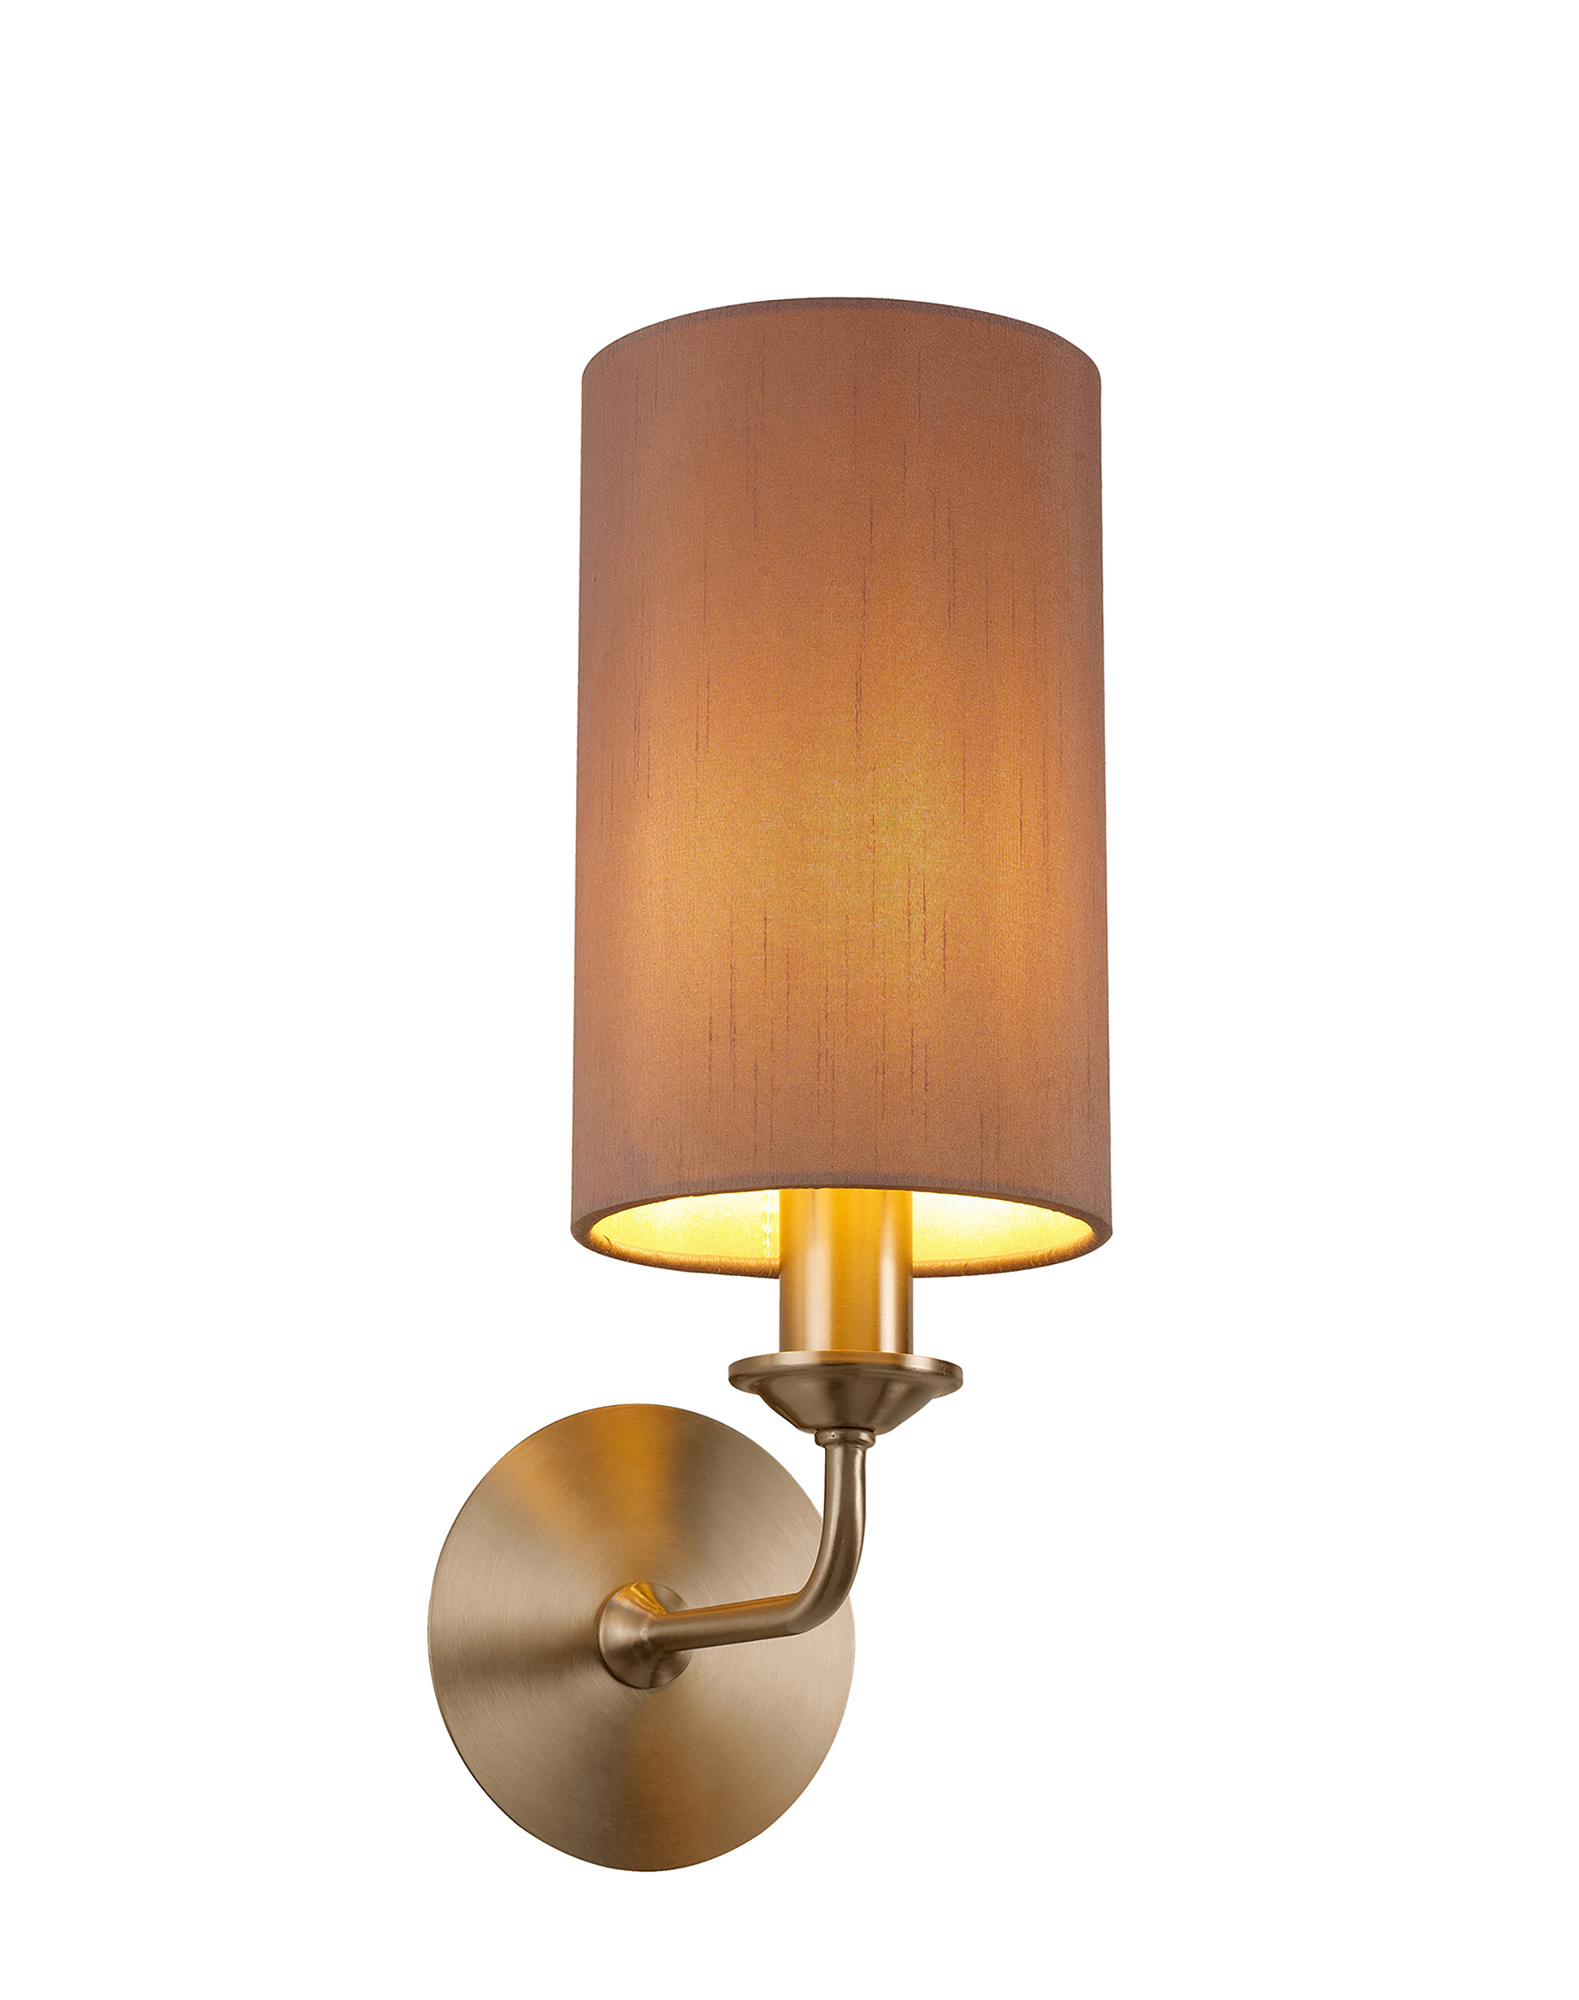 DK0070  Banyan Wall Lamp 1 Light Satin Nickel; Taupe/Halo Gold